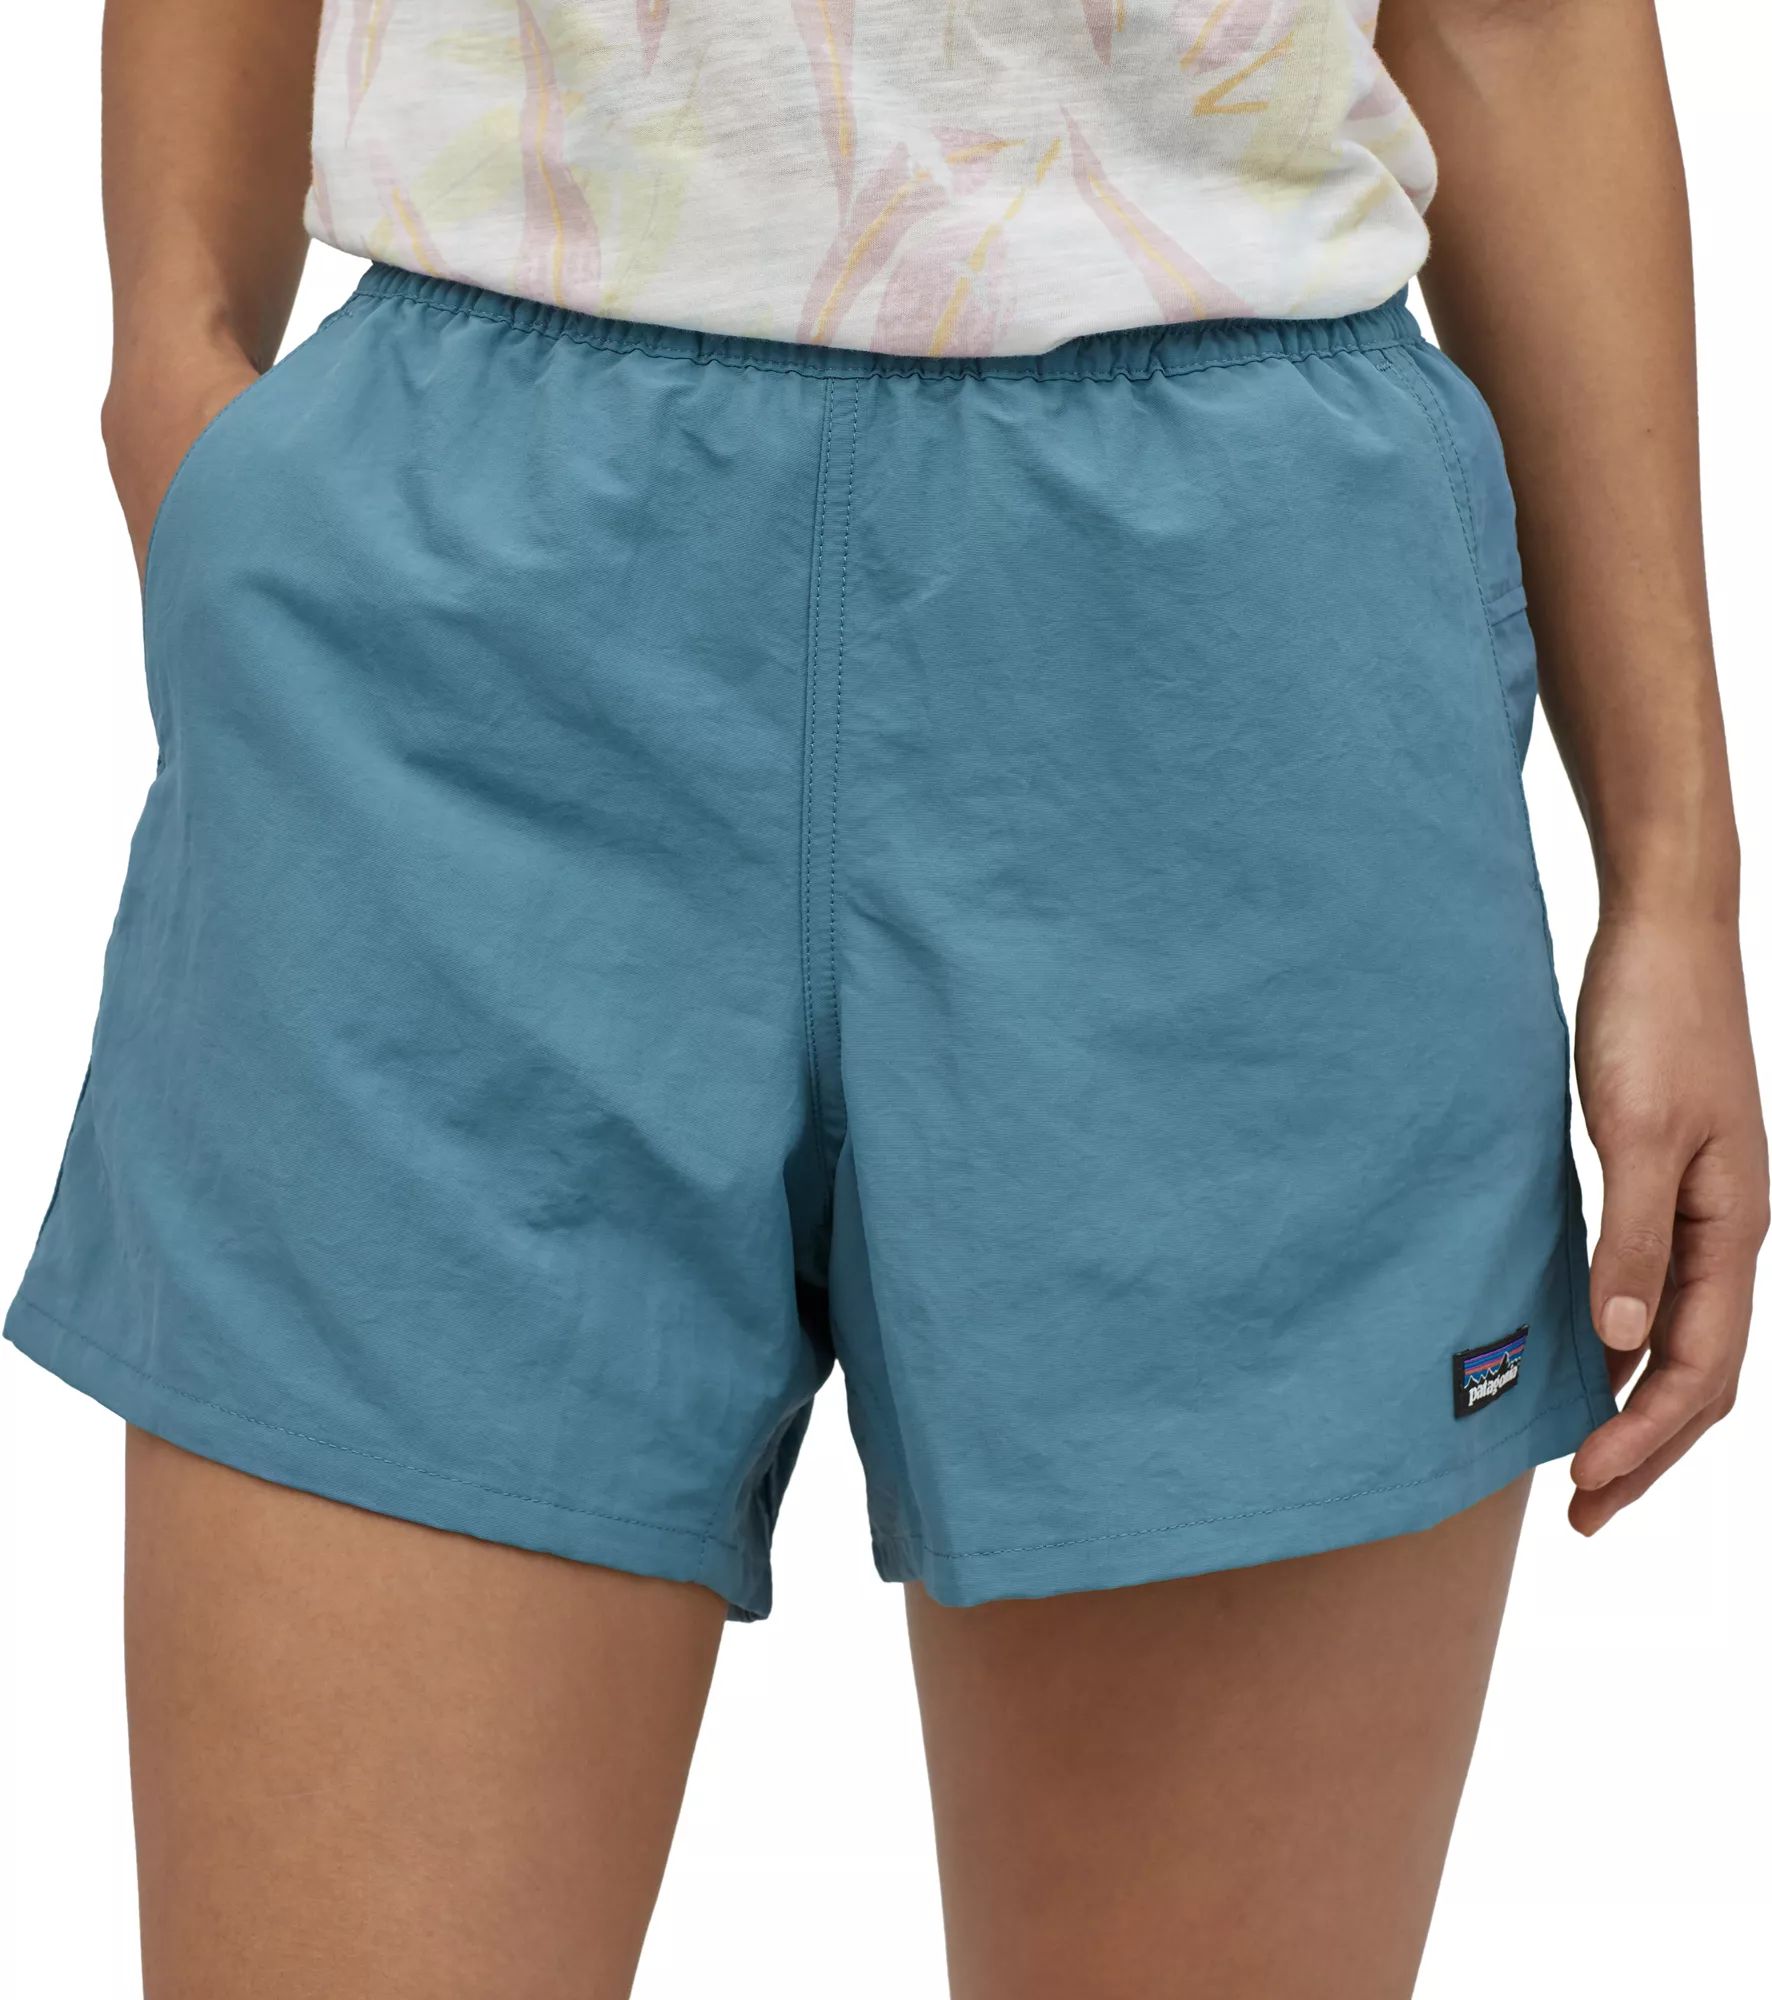 Patagonia Women's Baggies 5"" Shorts, XL, Pigeon Blue | Dick's Sporting Goods